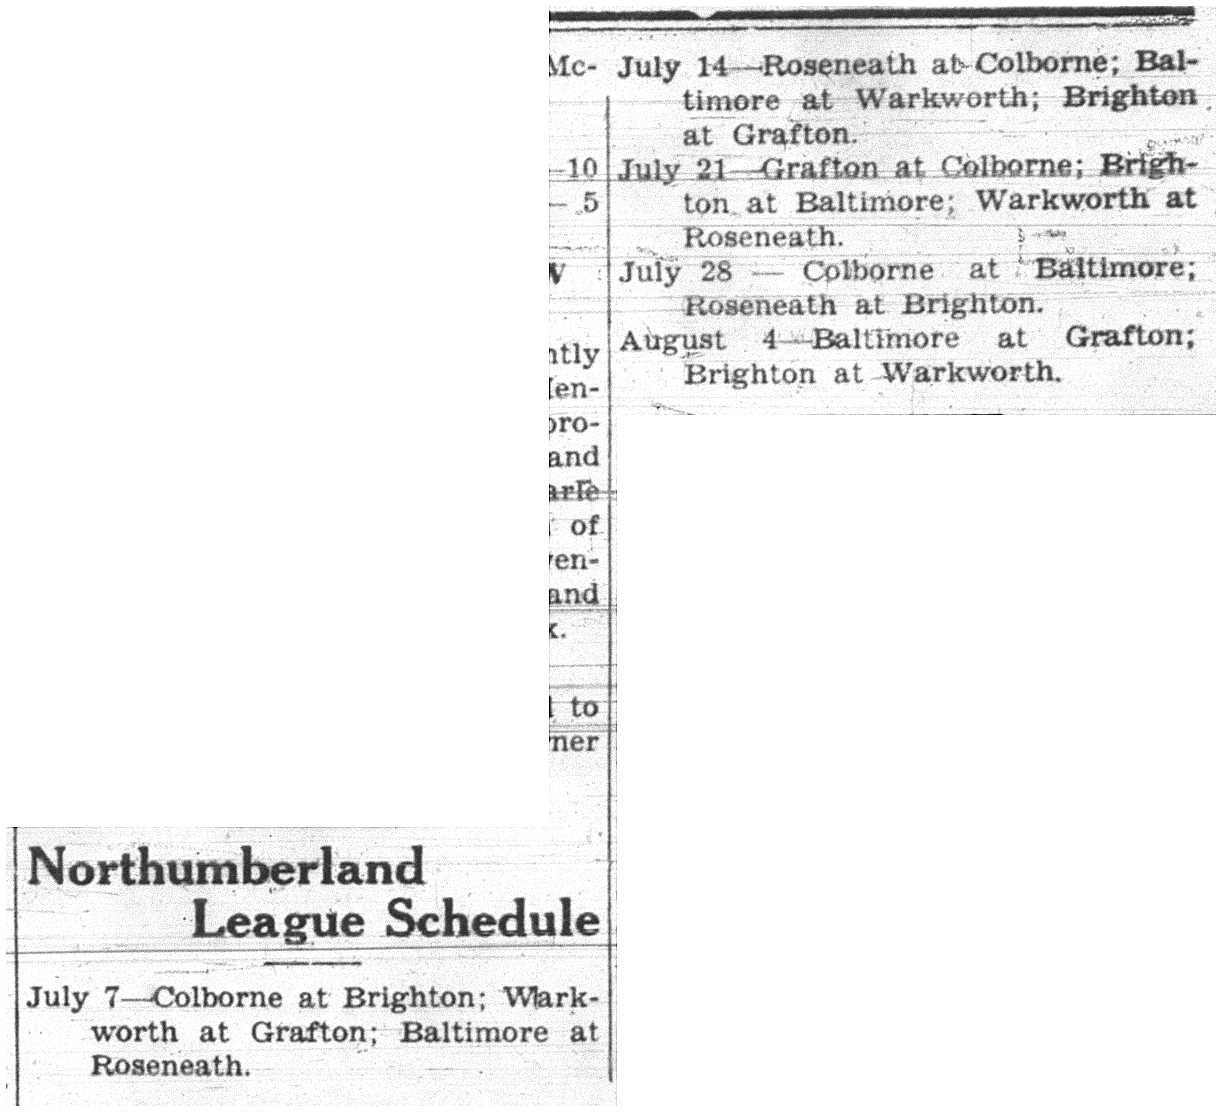 1937-07-01 Baseball - Northumberland League Schedule